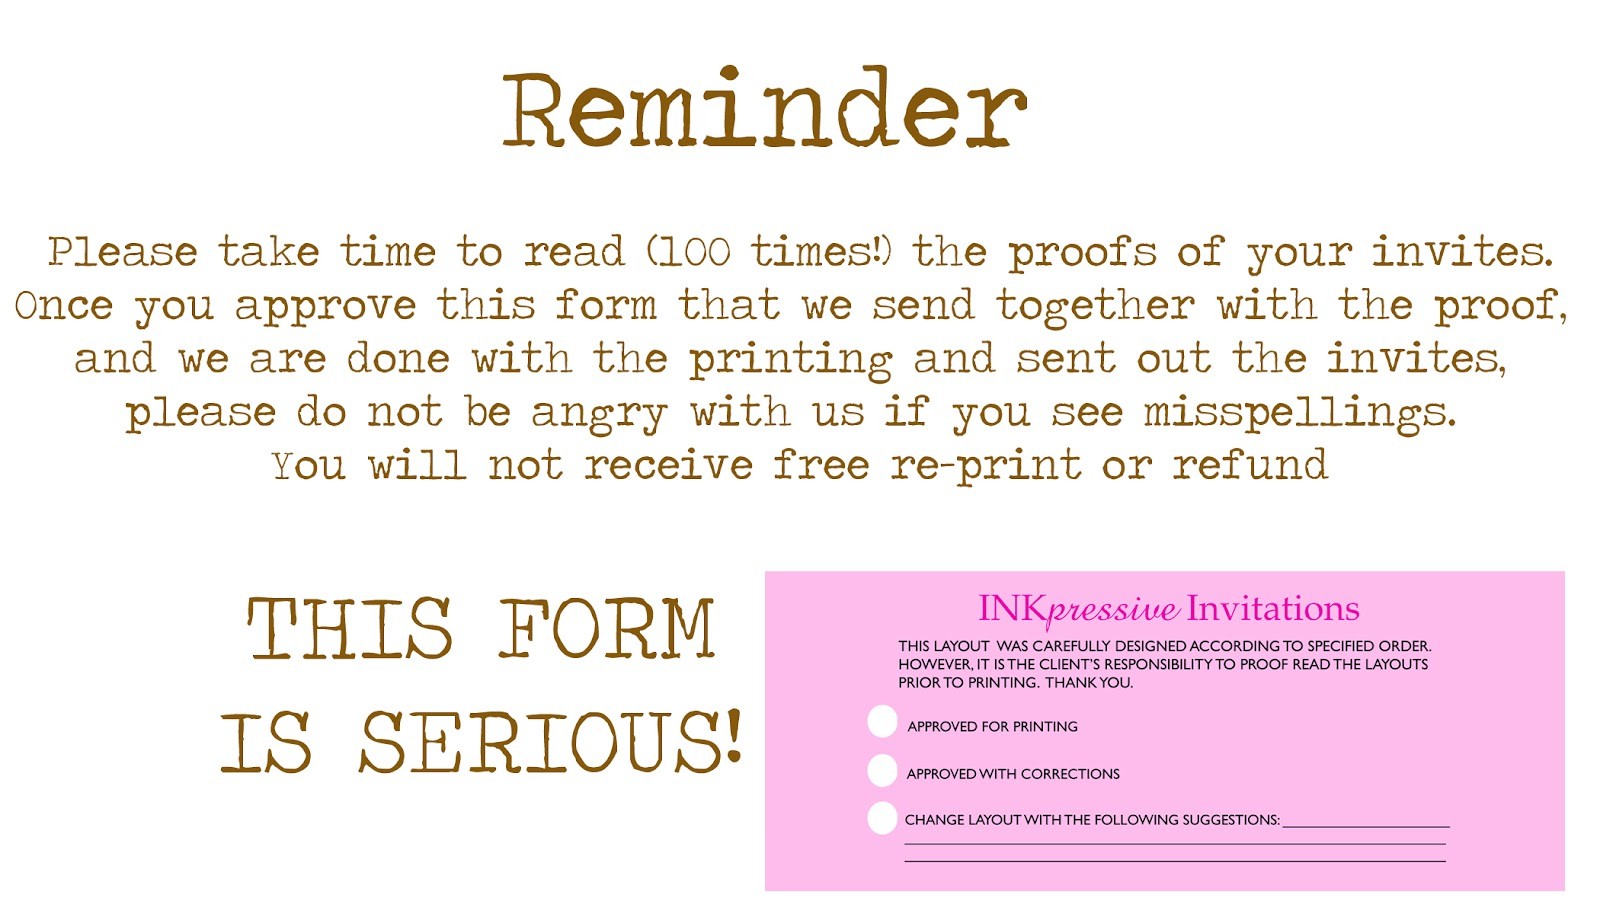 Invitation Reminder Message Sample | Wedding Tips and Inspiration